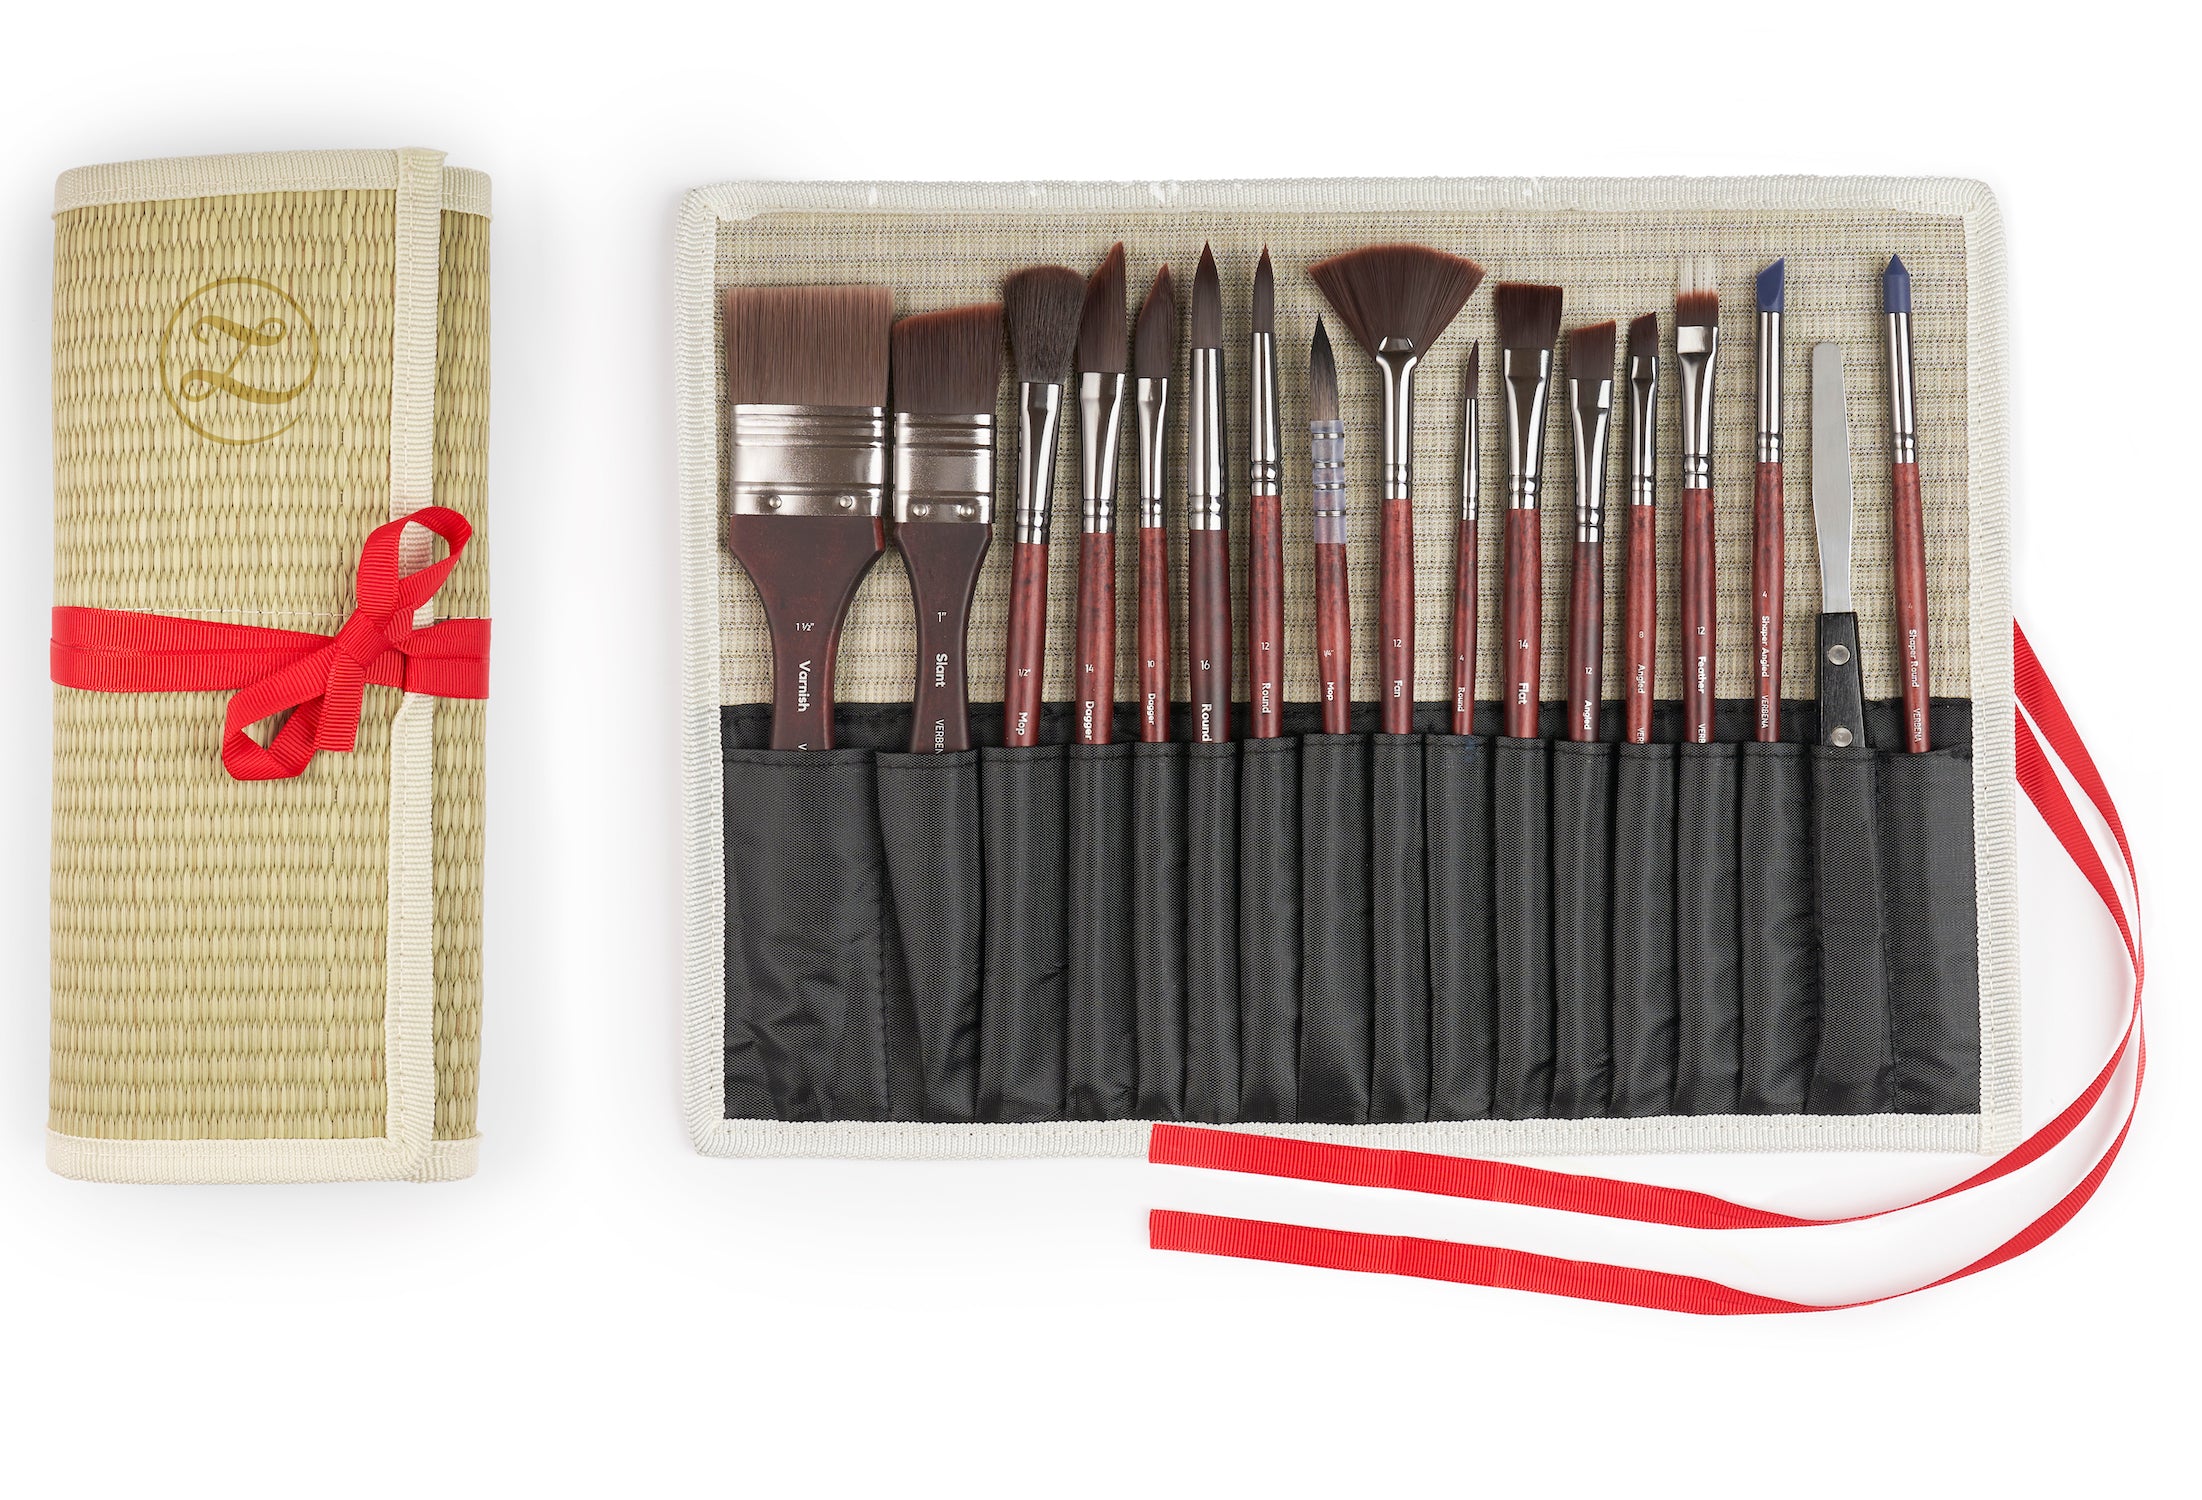 Oil Paint Brushes & Oil Paint Brush Sets By ZenART Supplies